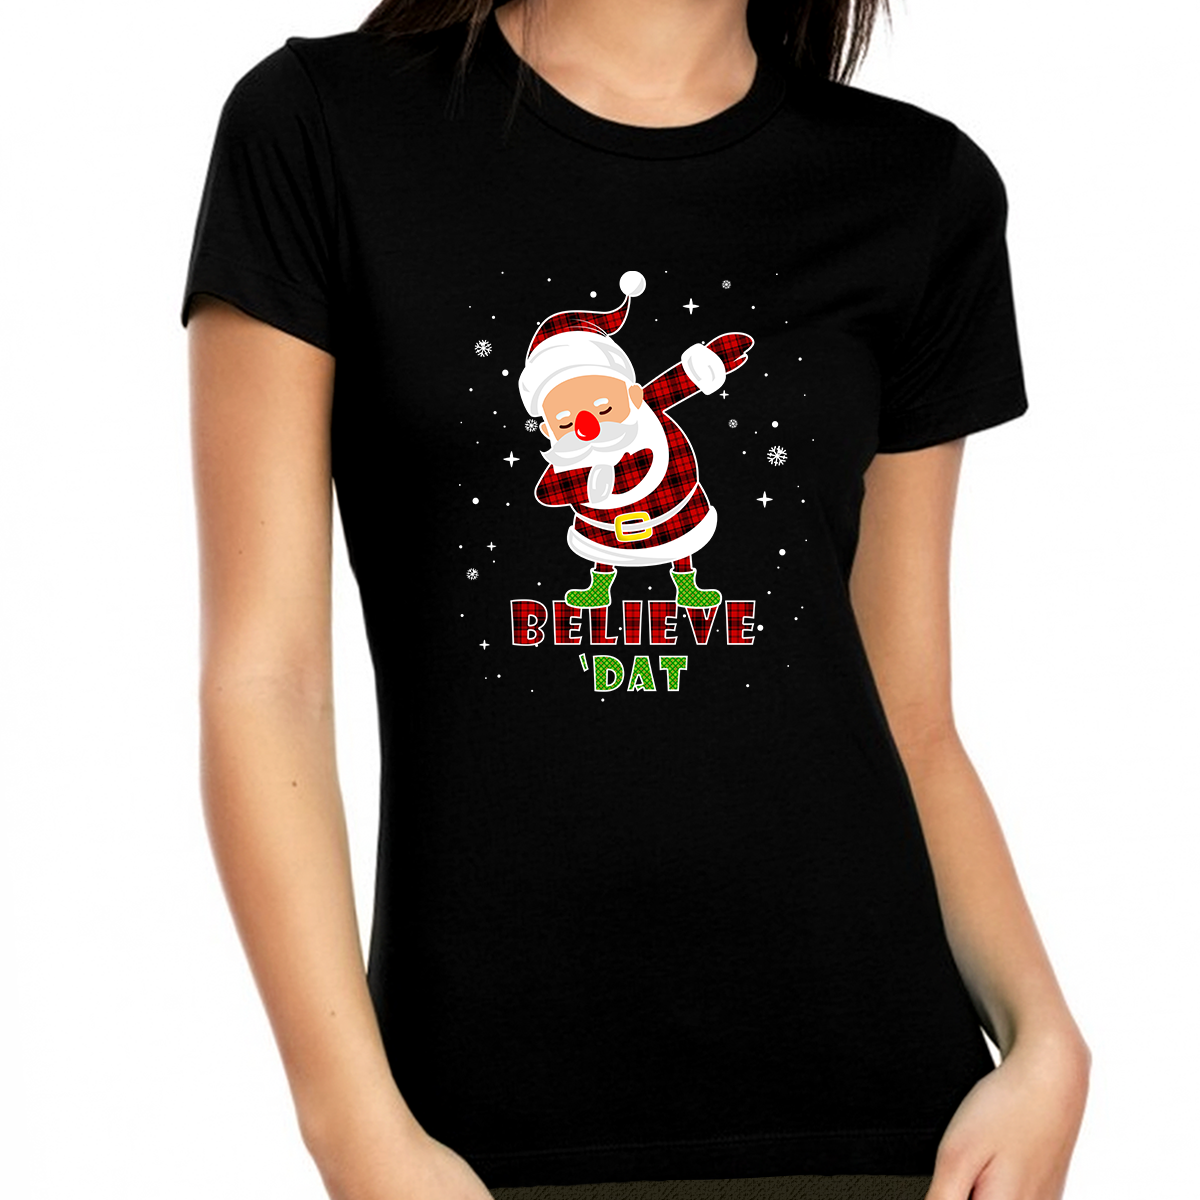 Funny Christmas Shirts for Women Matching Believe Christmas Clothes for Women Cool Christmas Shirt